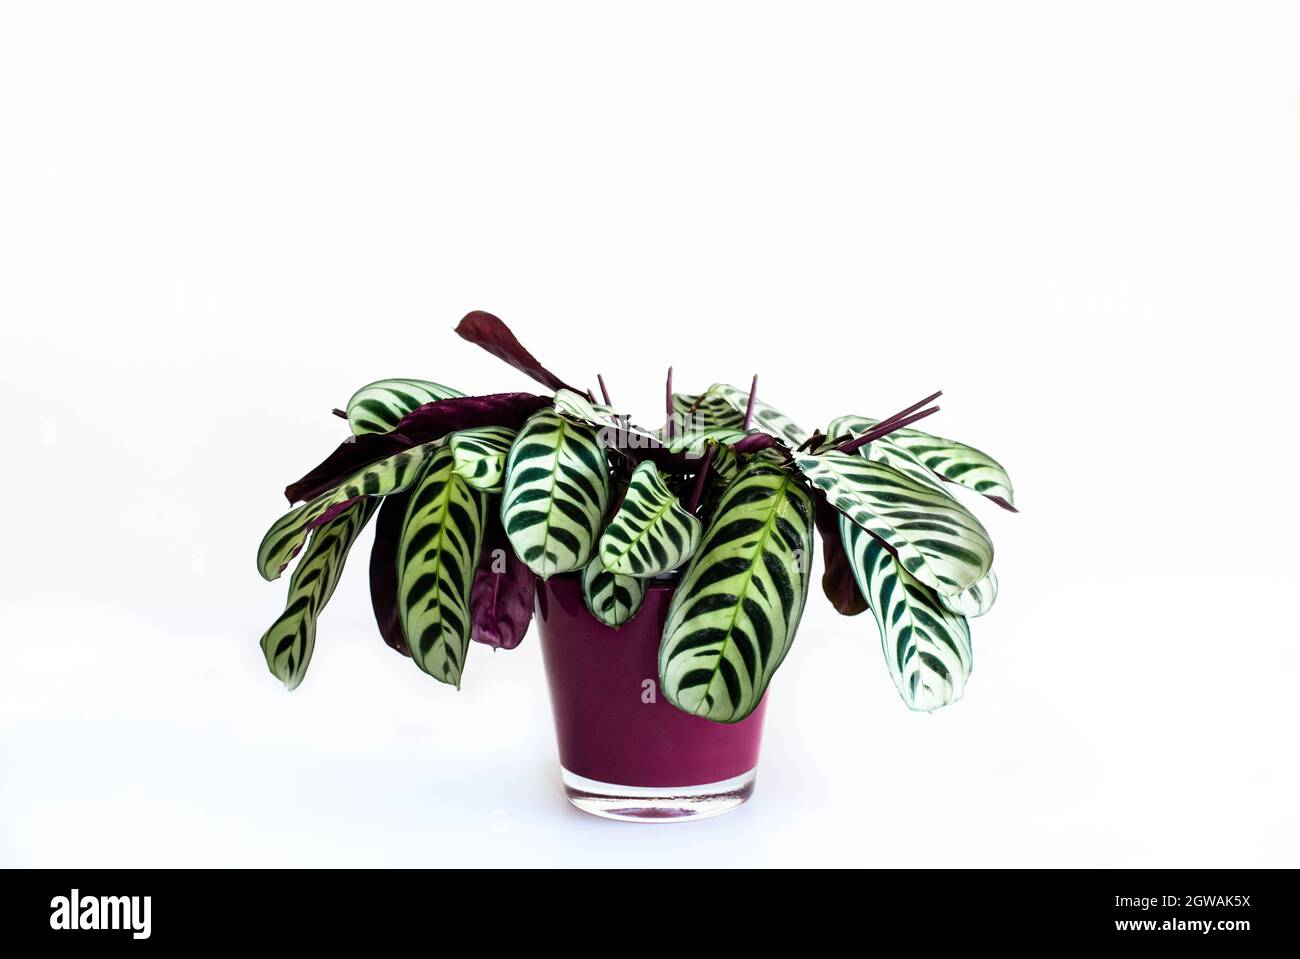 Houseplant Calathea Ornata with beautiful Stripy leaves Stock Photo